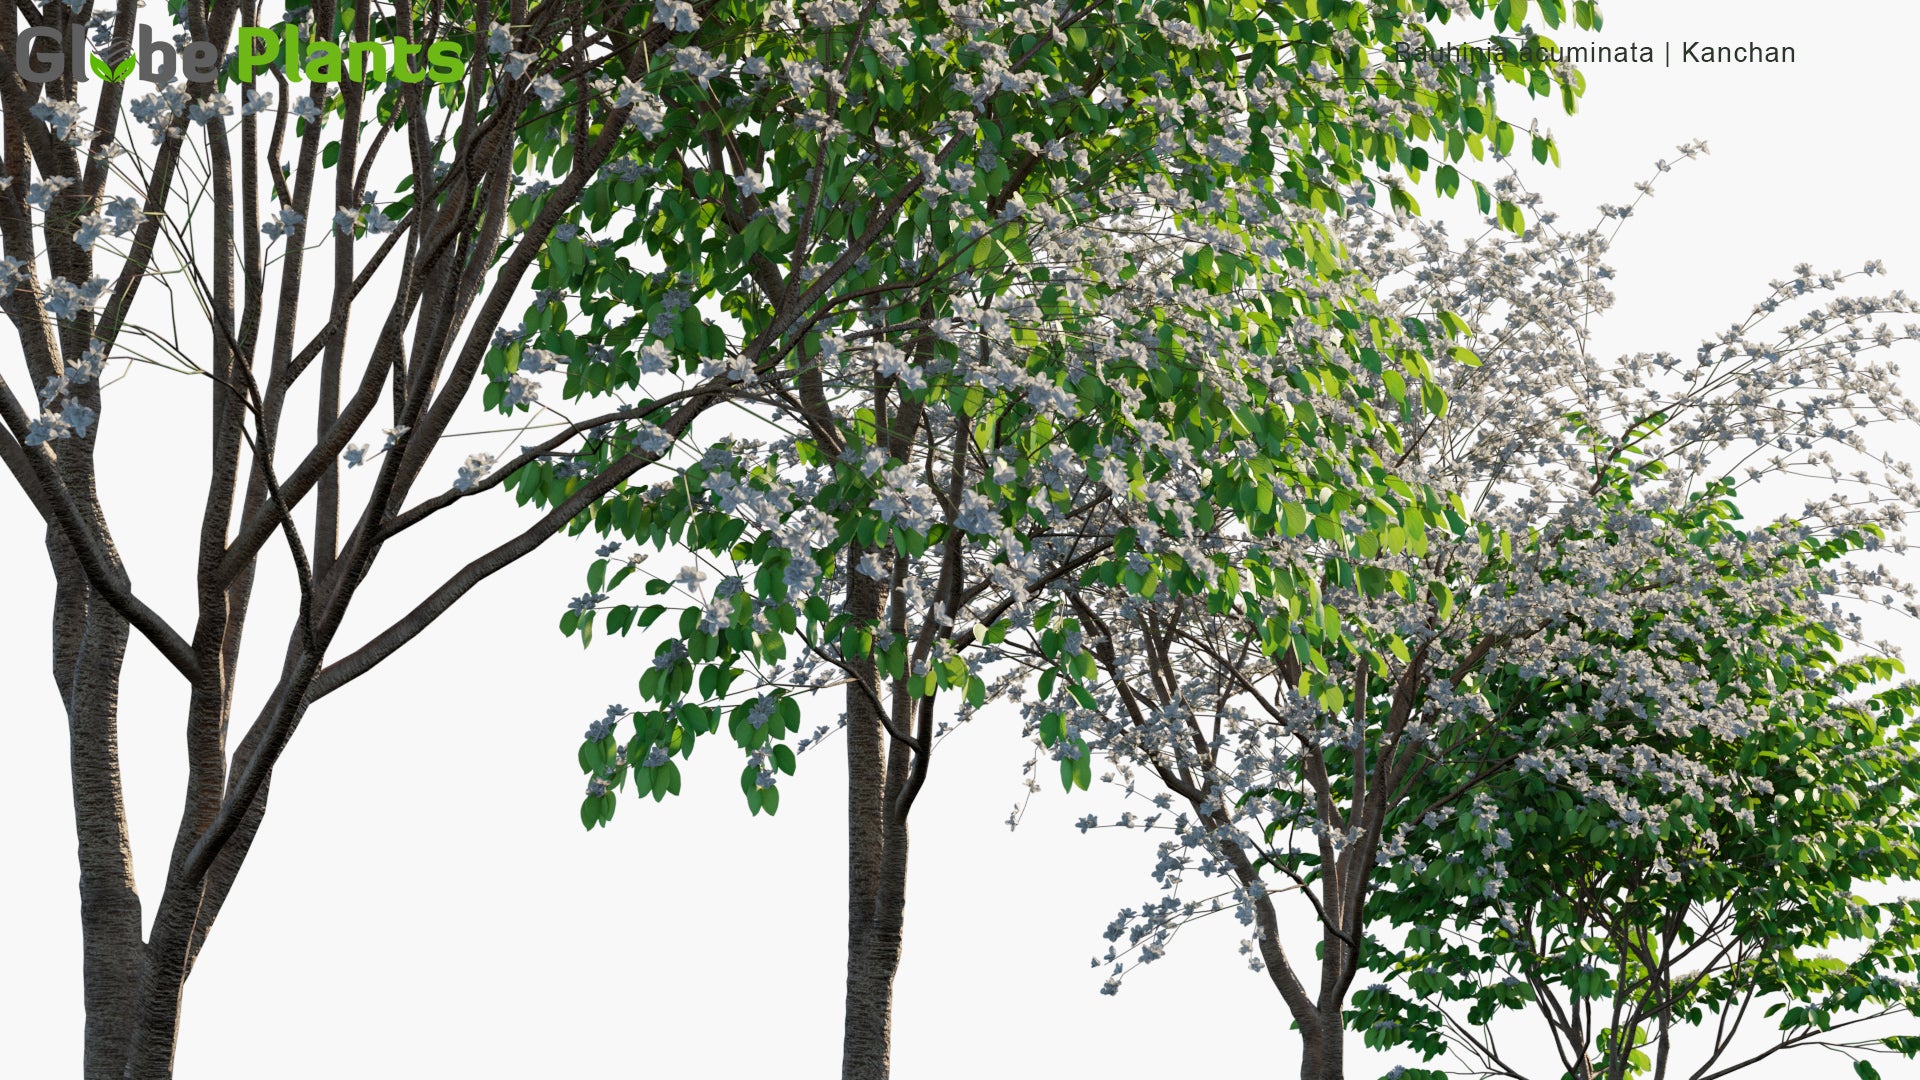 Bauhinia Acuminata - Kanchan, Dwarf White Bauhinia, White Orchid-Tree, Snowy Orchid-Tree